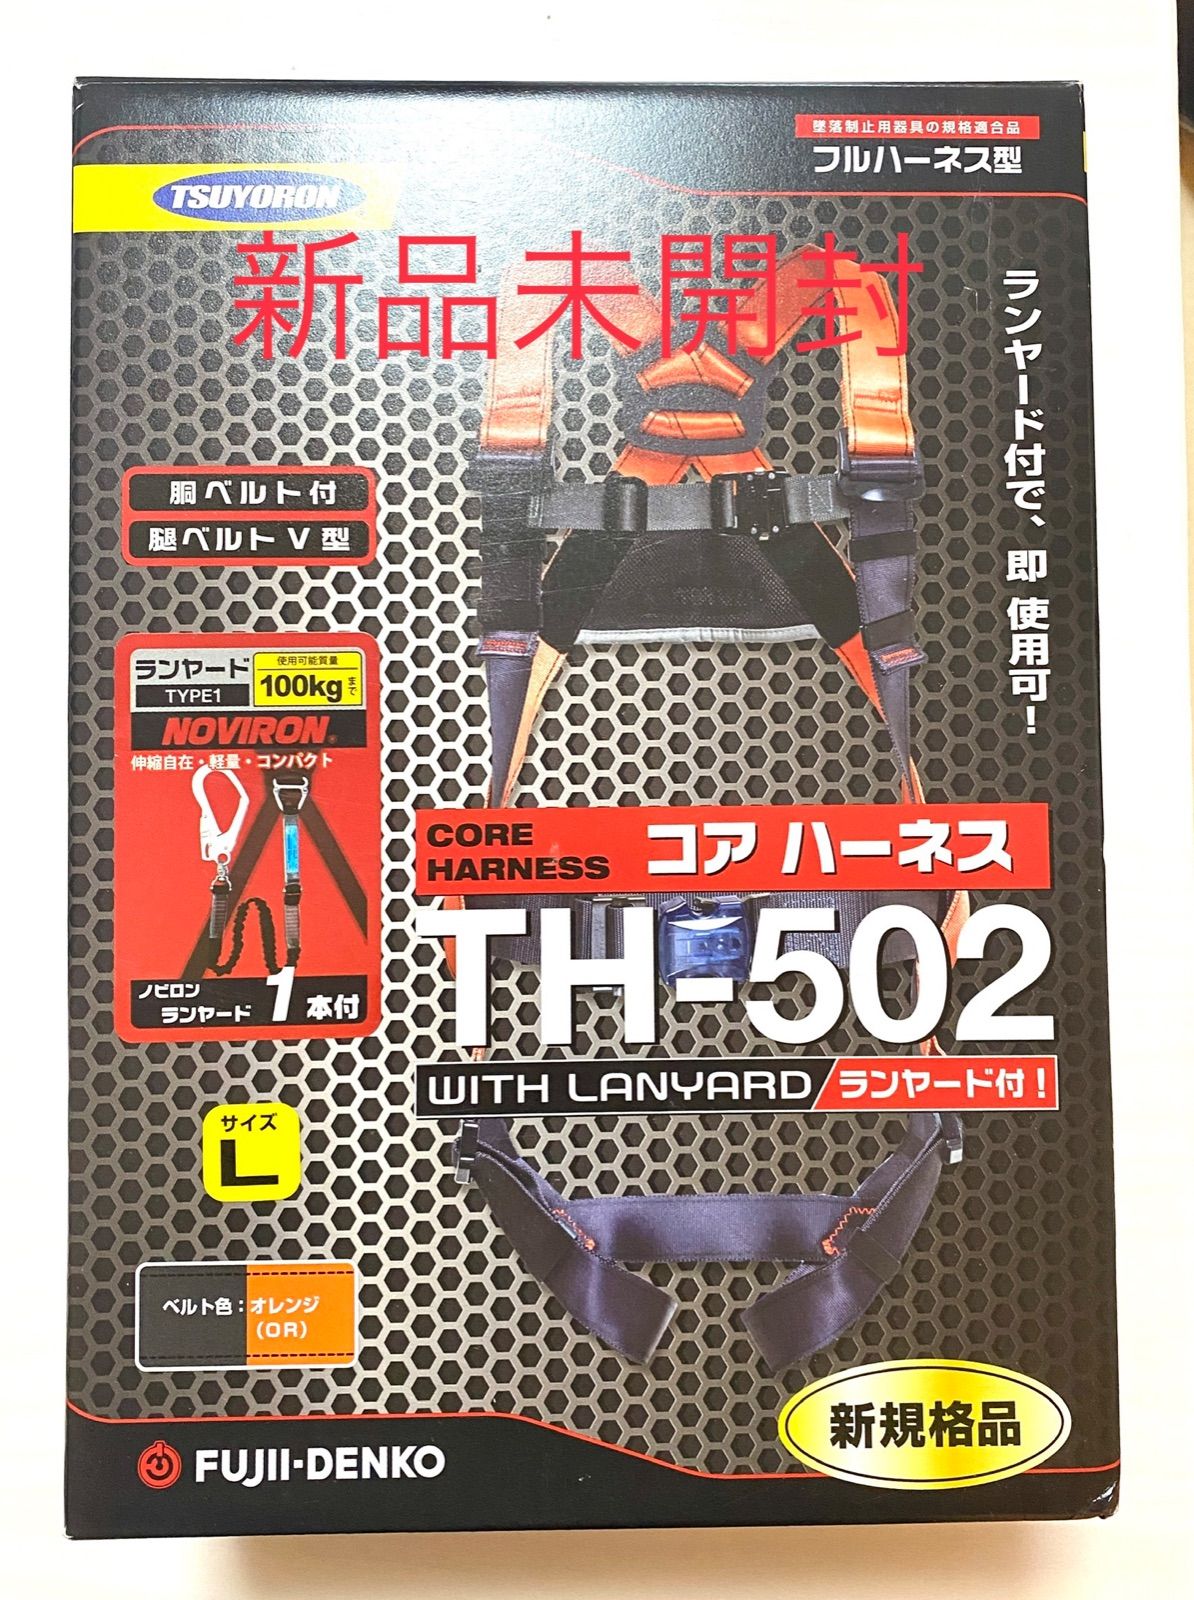 SALE／101%OFF】 藤井電工 TH-502 新規格フルハーネスMサイズ ツインランヤード付き